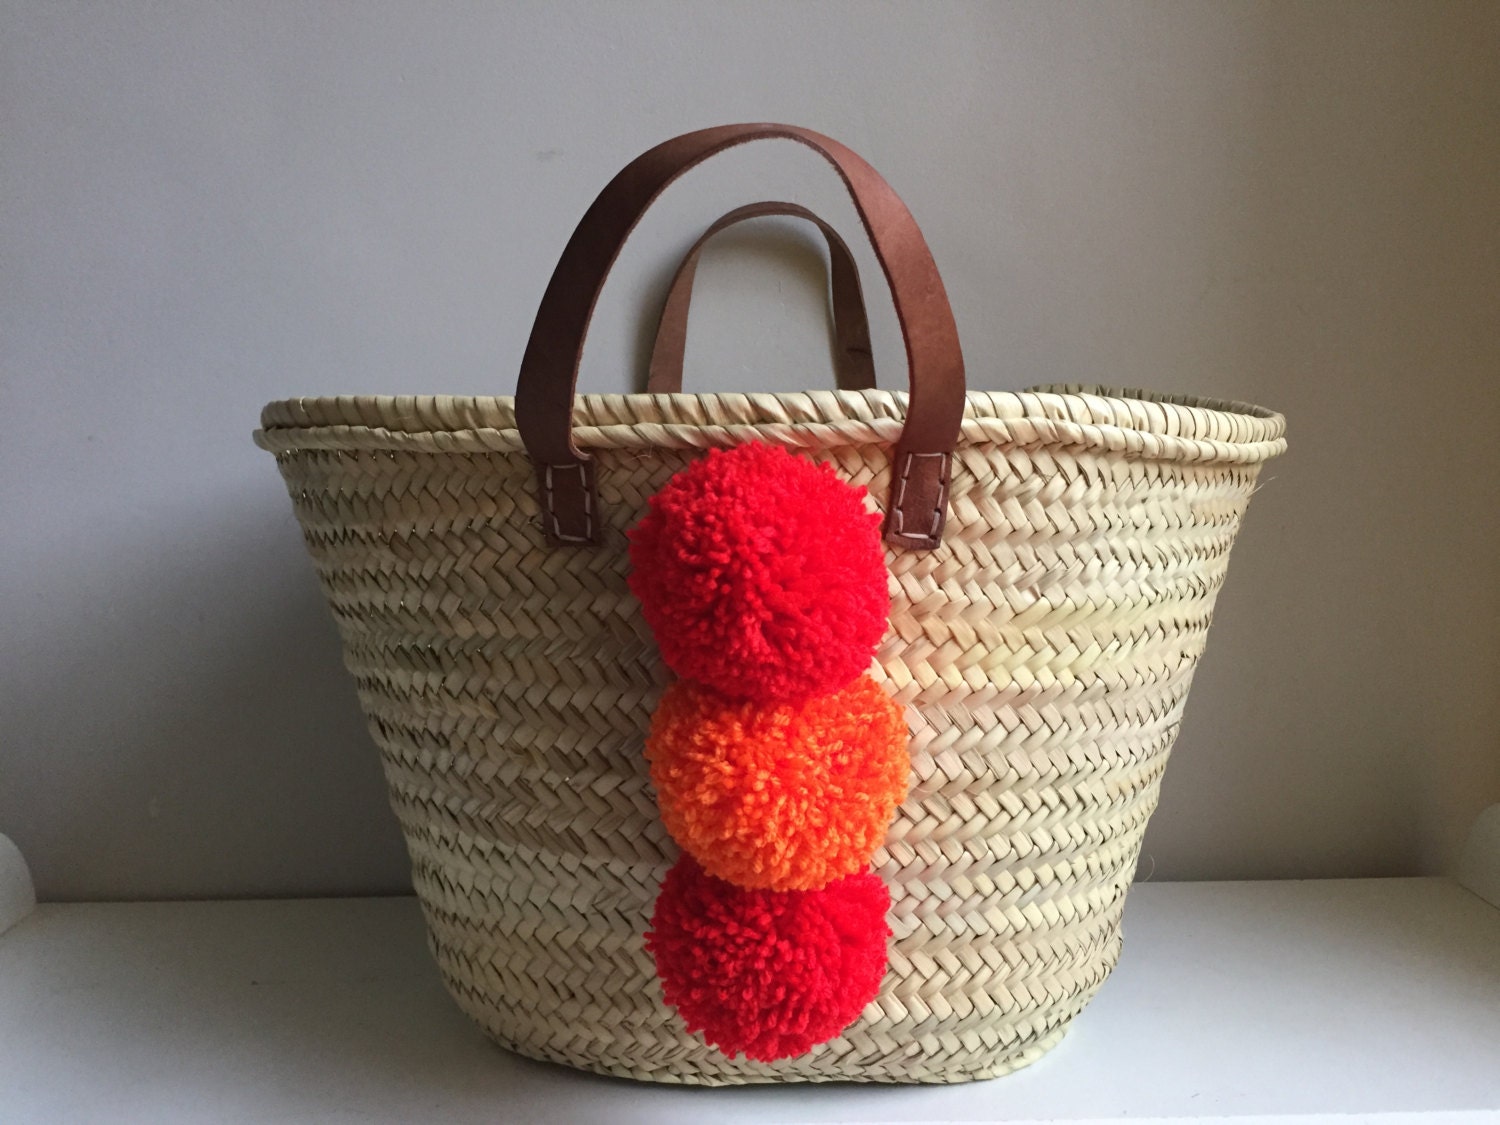 ORANGE CRUSH Straw Basket / Beach Bag with hand crafted pom